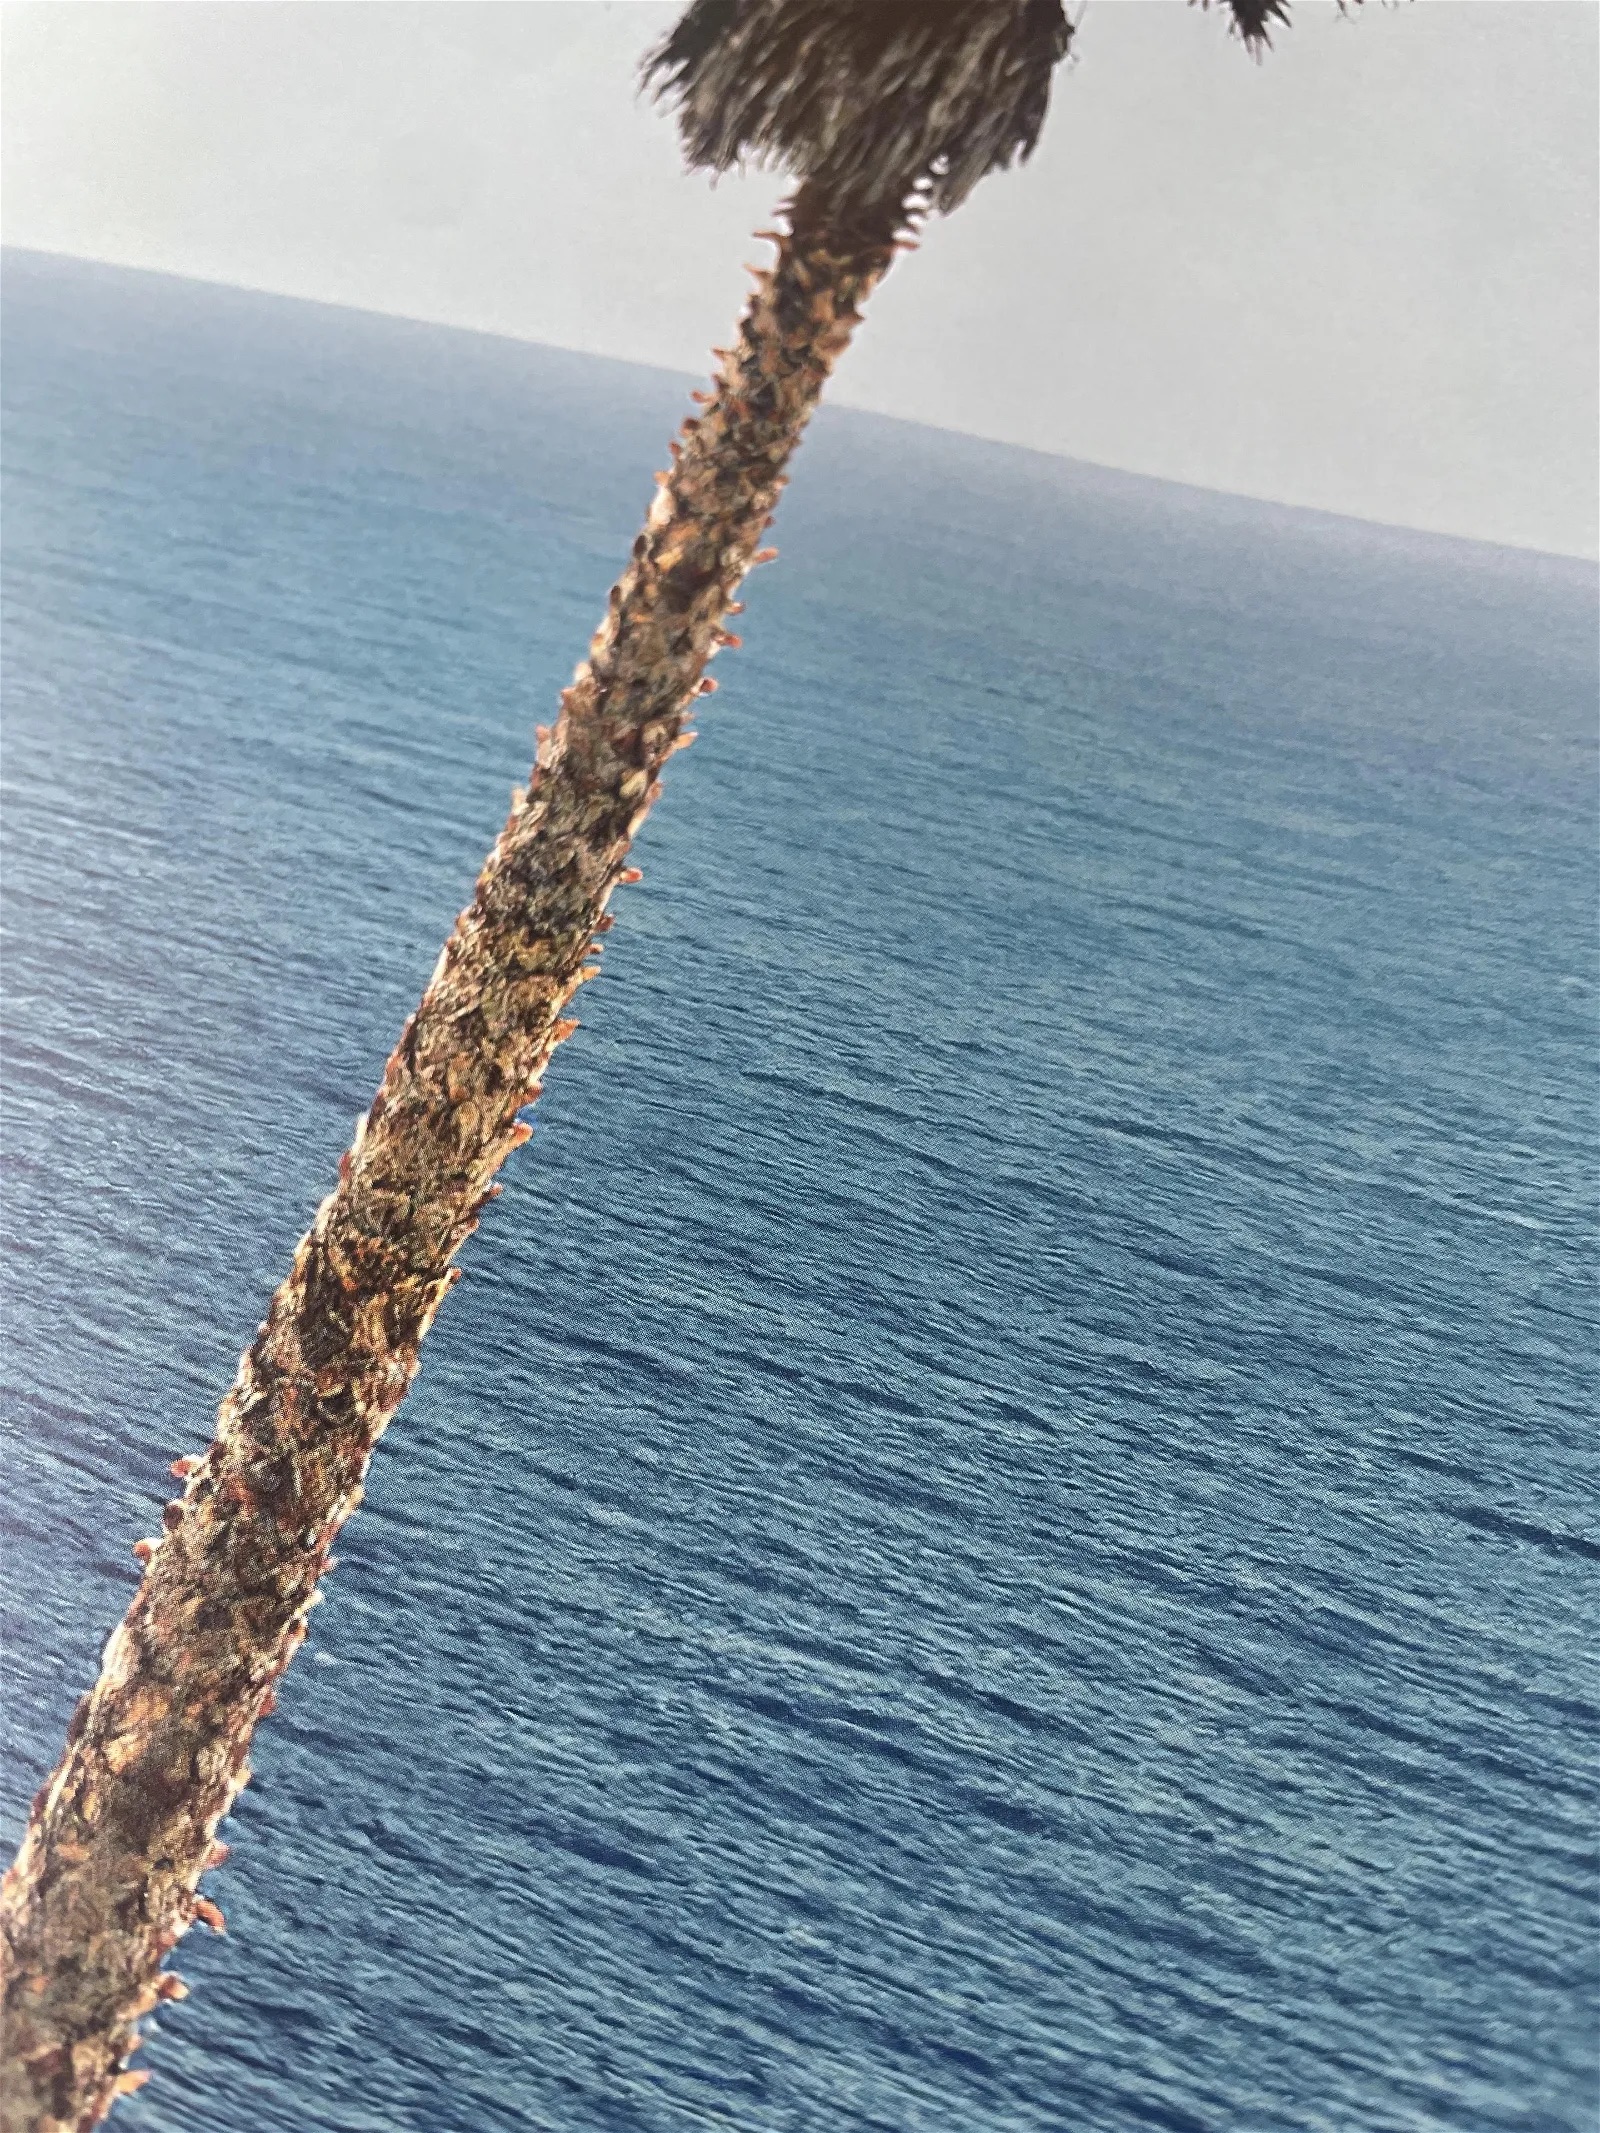 John Baldessari "Palm Tree" Offset Lithograph - Image 6 of 6